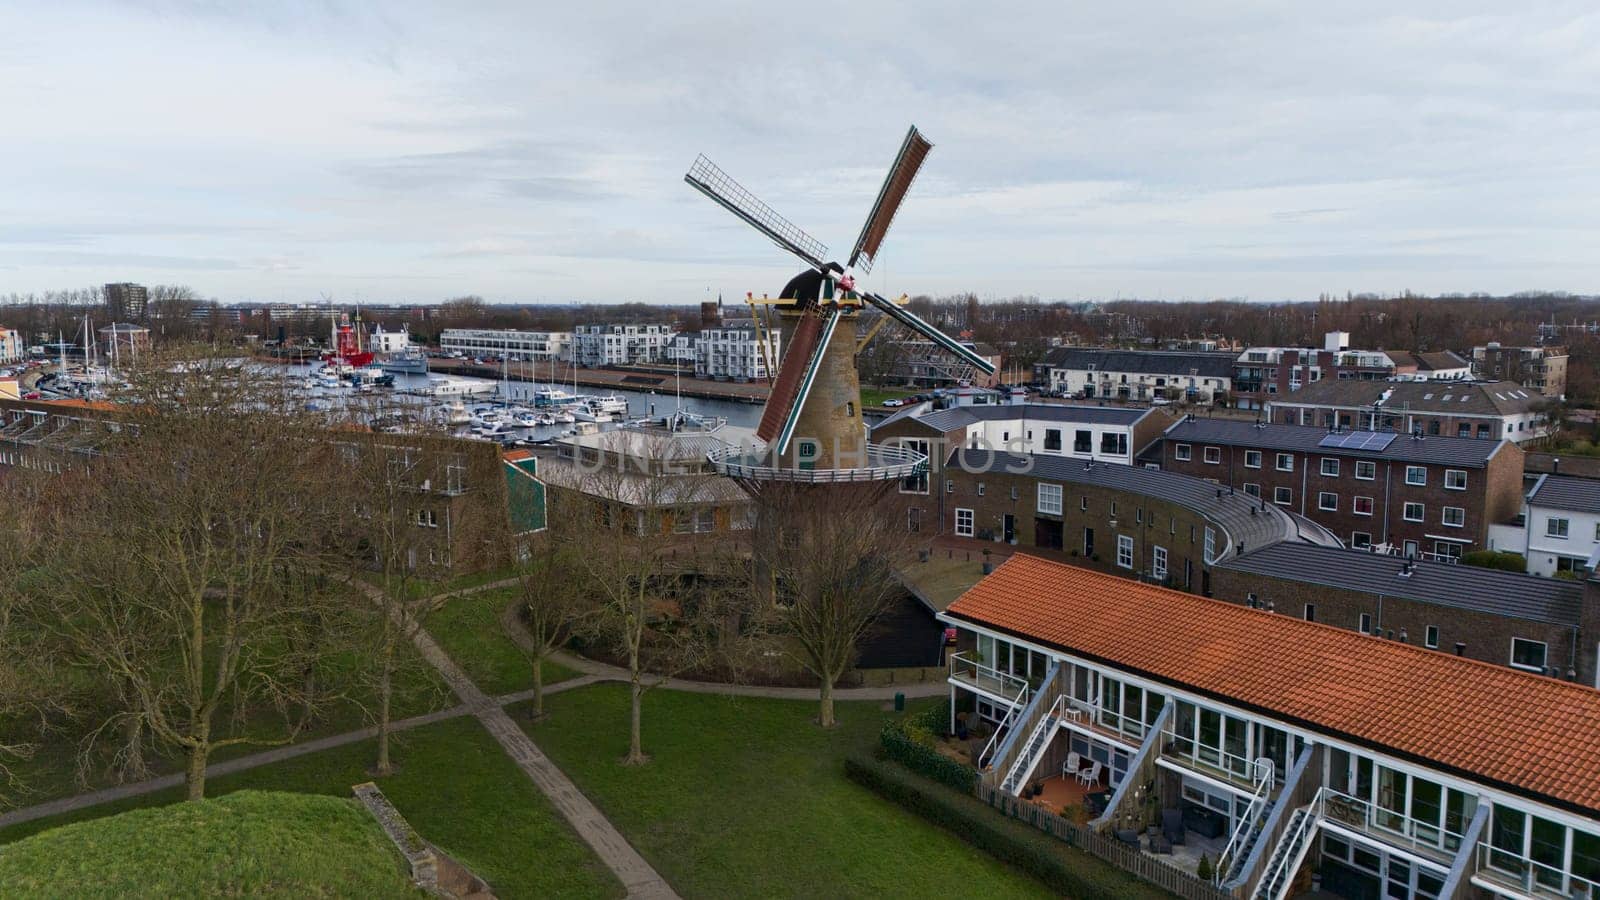 windmill de goede hoop in holland village Hellevoetsluis by compuinfoto